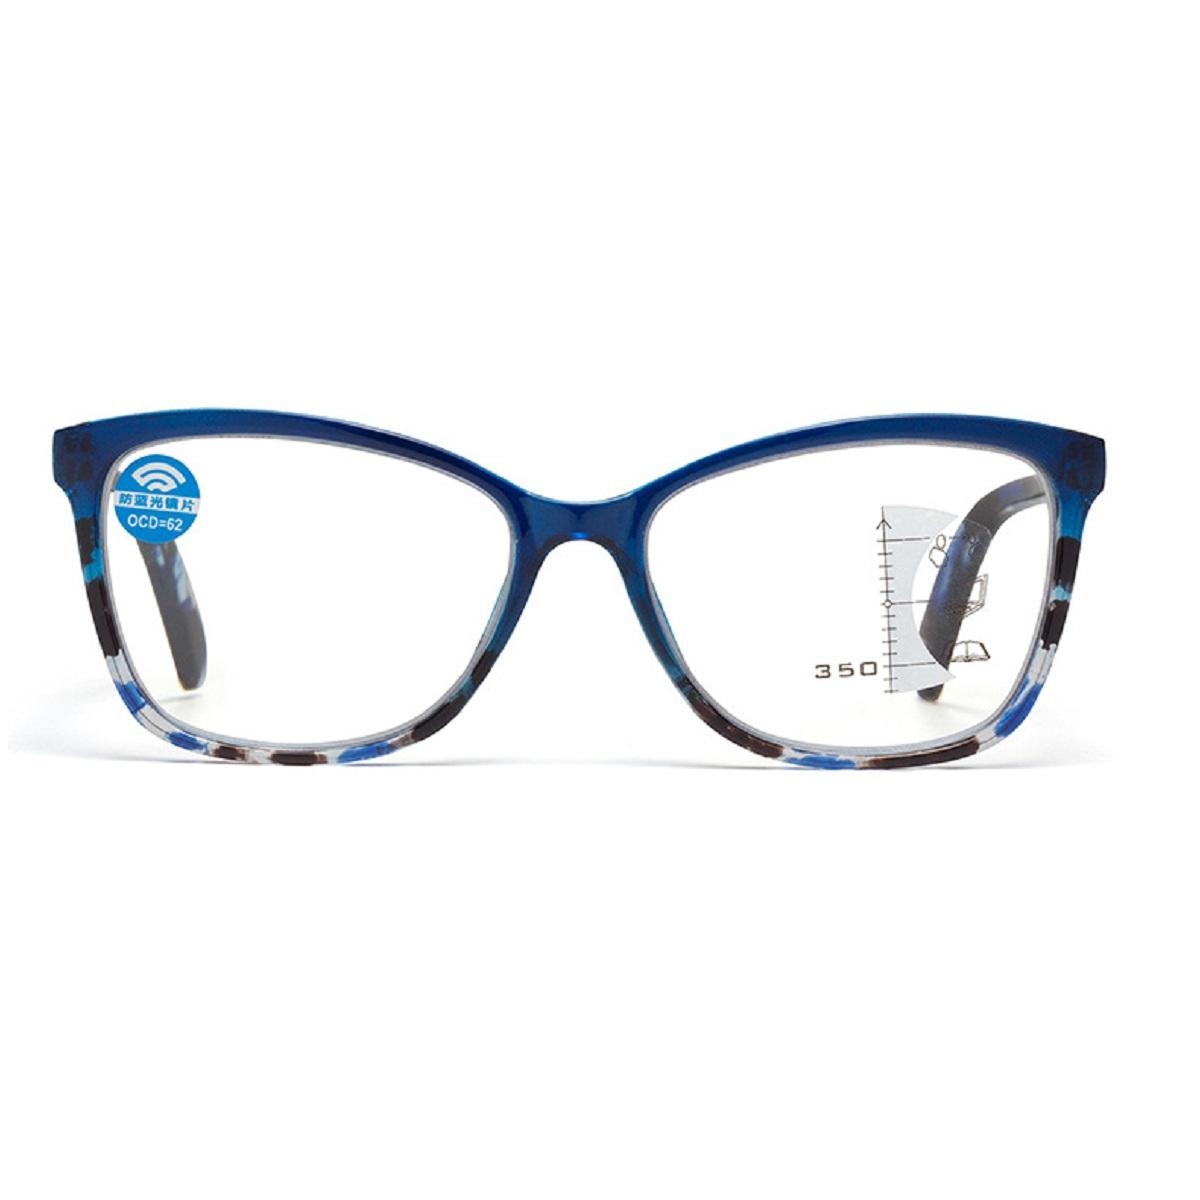 Presbyopic Glasses Tortoiseshell Blue for Men and Women with Anti blue light Comfortable Resin Presbyopic Glasses Readin